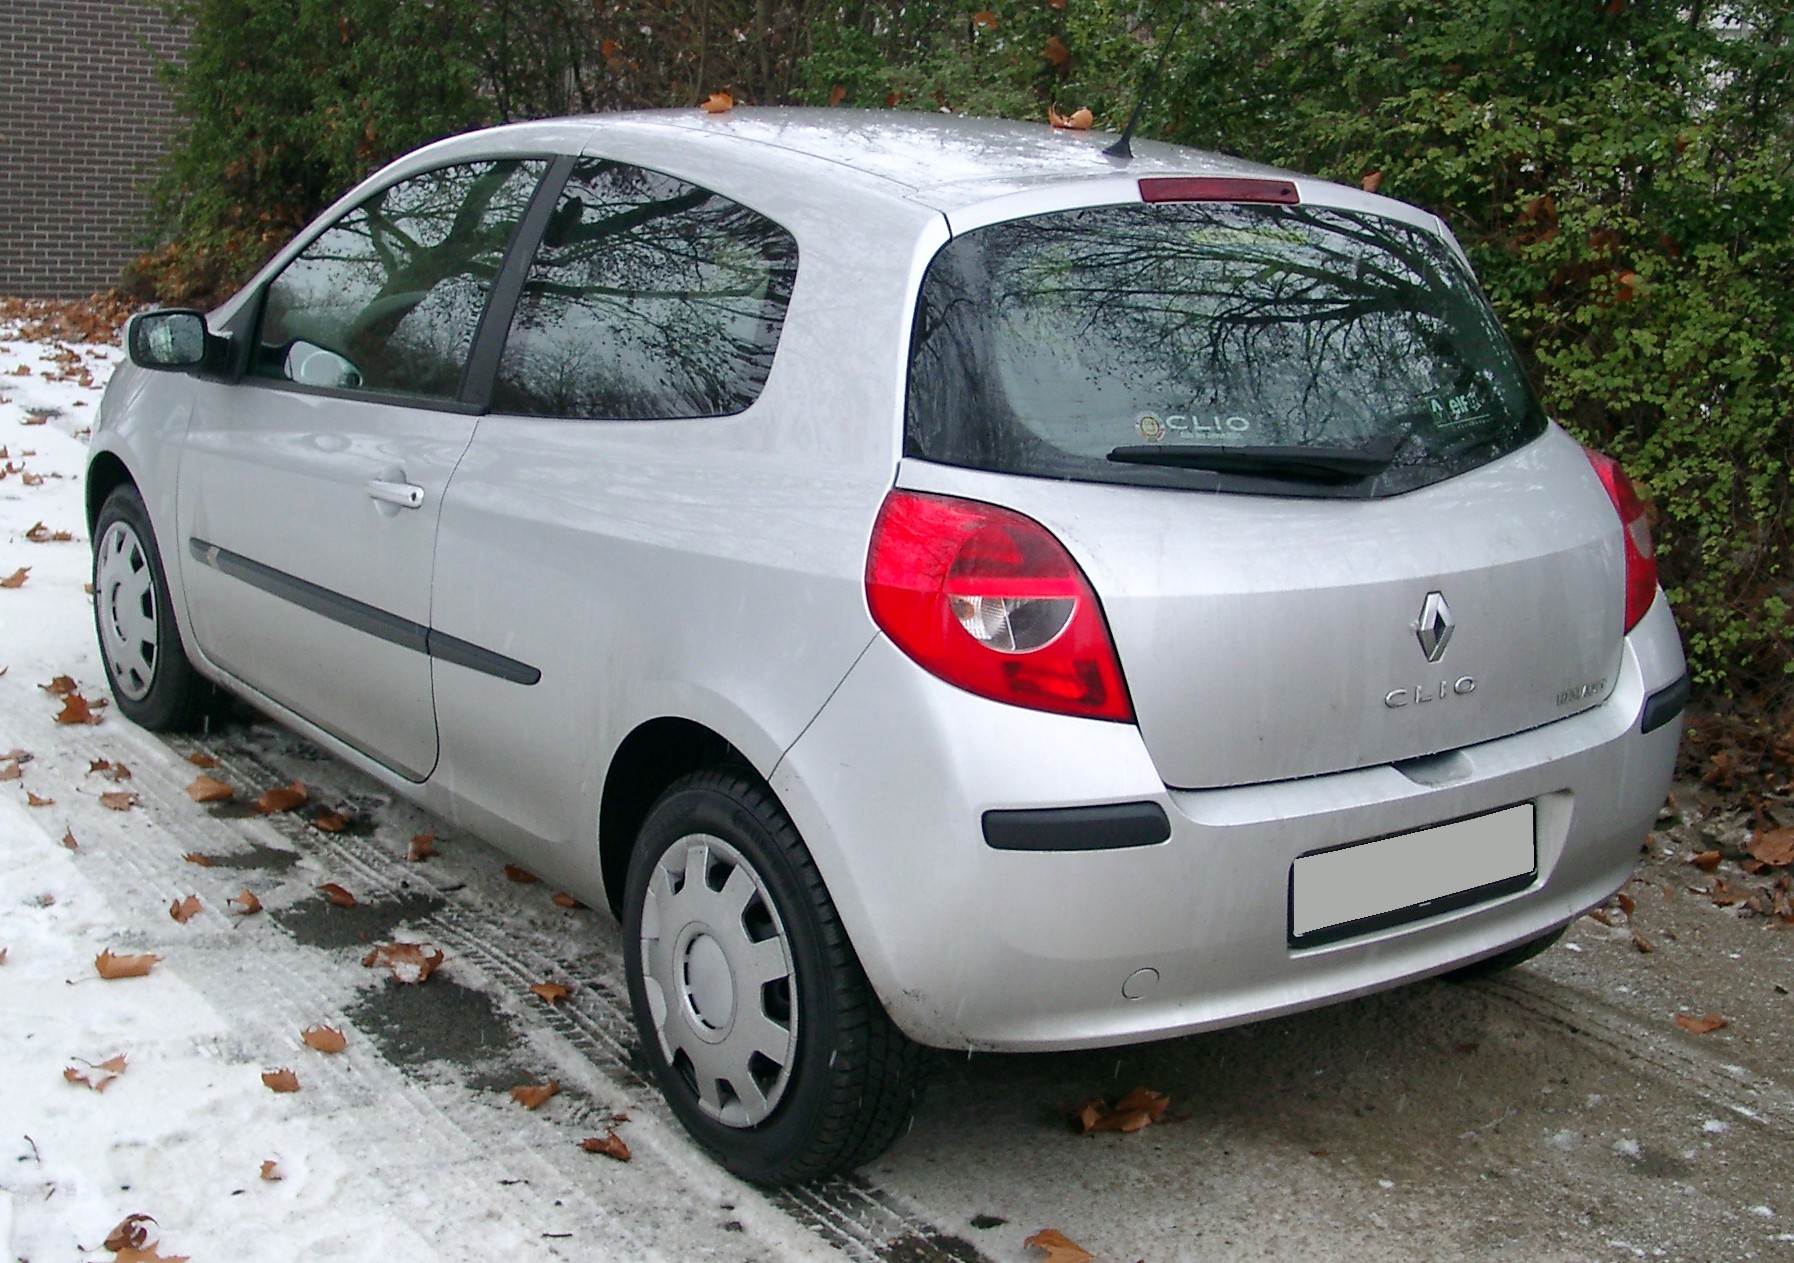 File:Renault Clio V IMG 2530.jpg - Wikimedia Commons